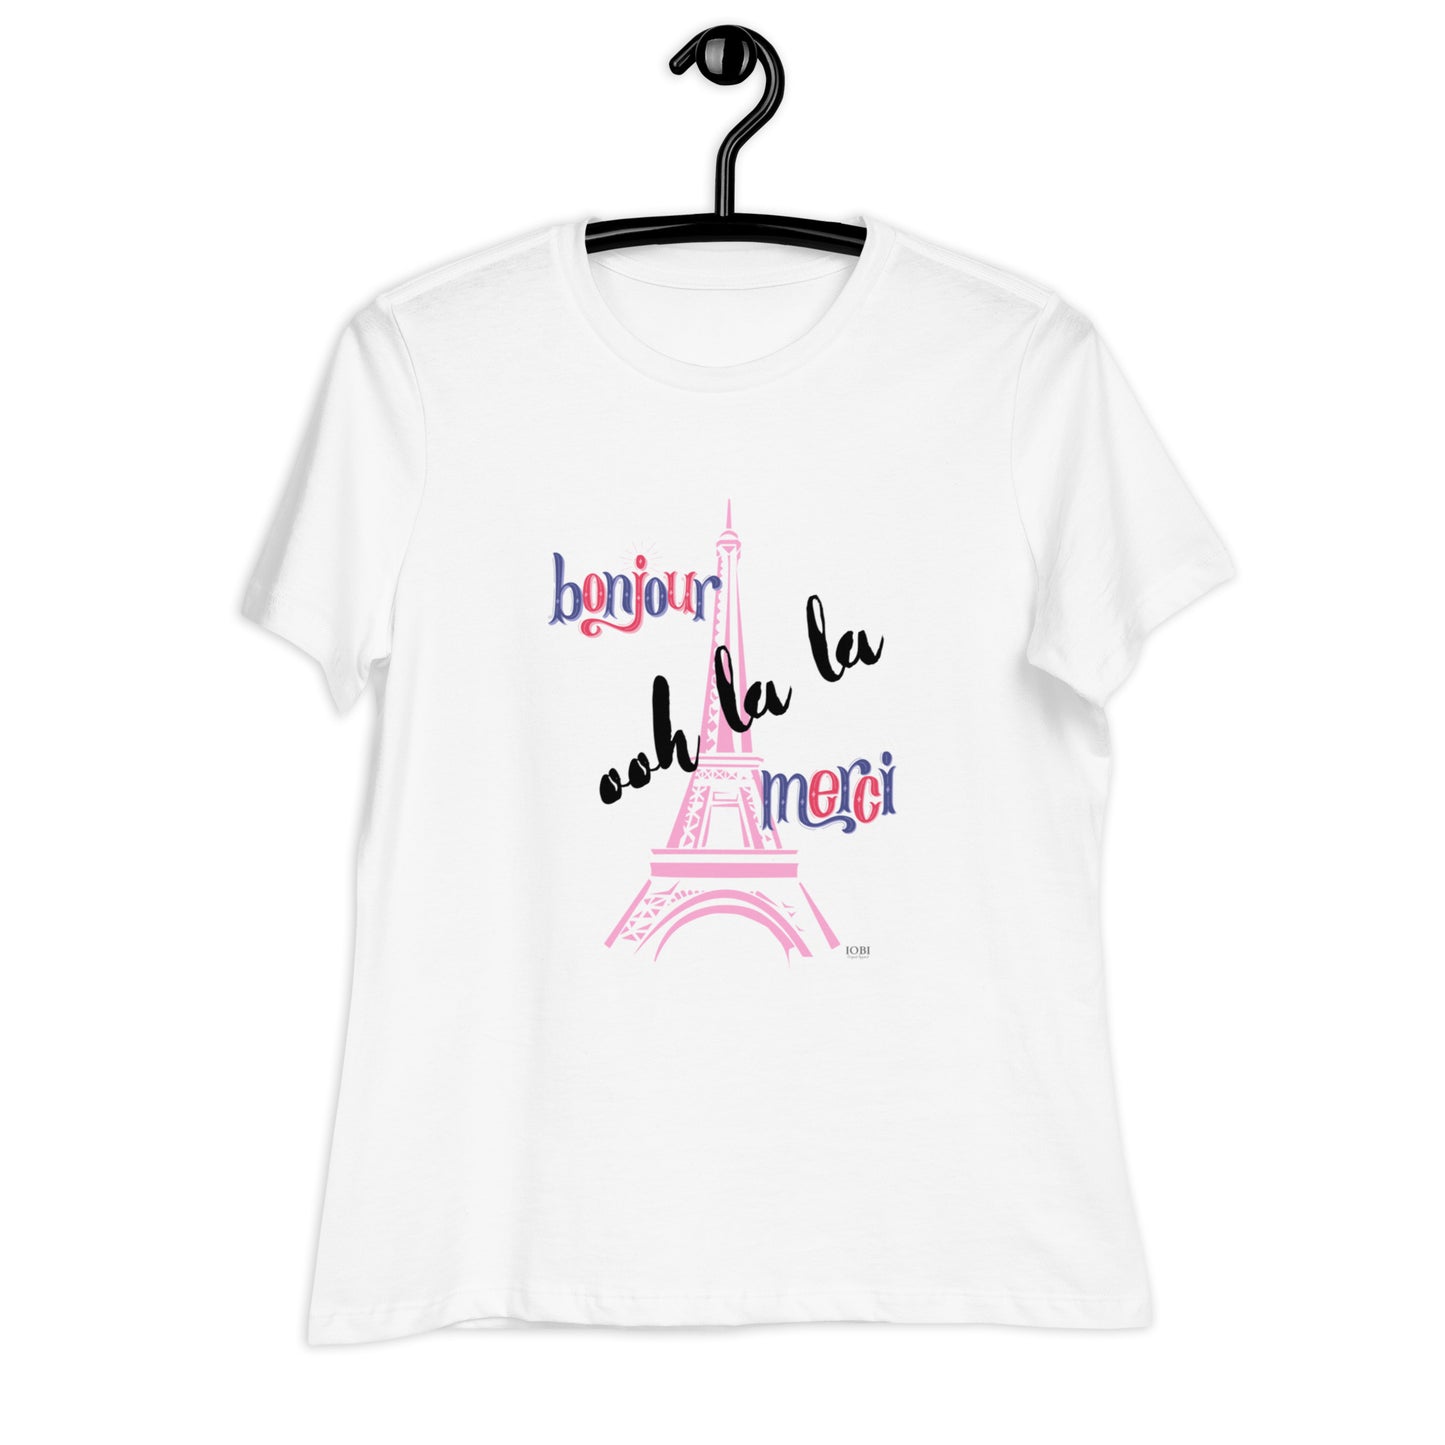 Women's Relaxed Soft & Smooth Premium Quality T-Shirt Eiffel Tower France Design by IOBI Original Apparel